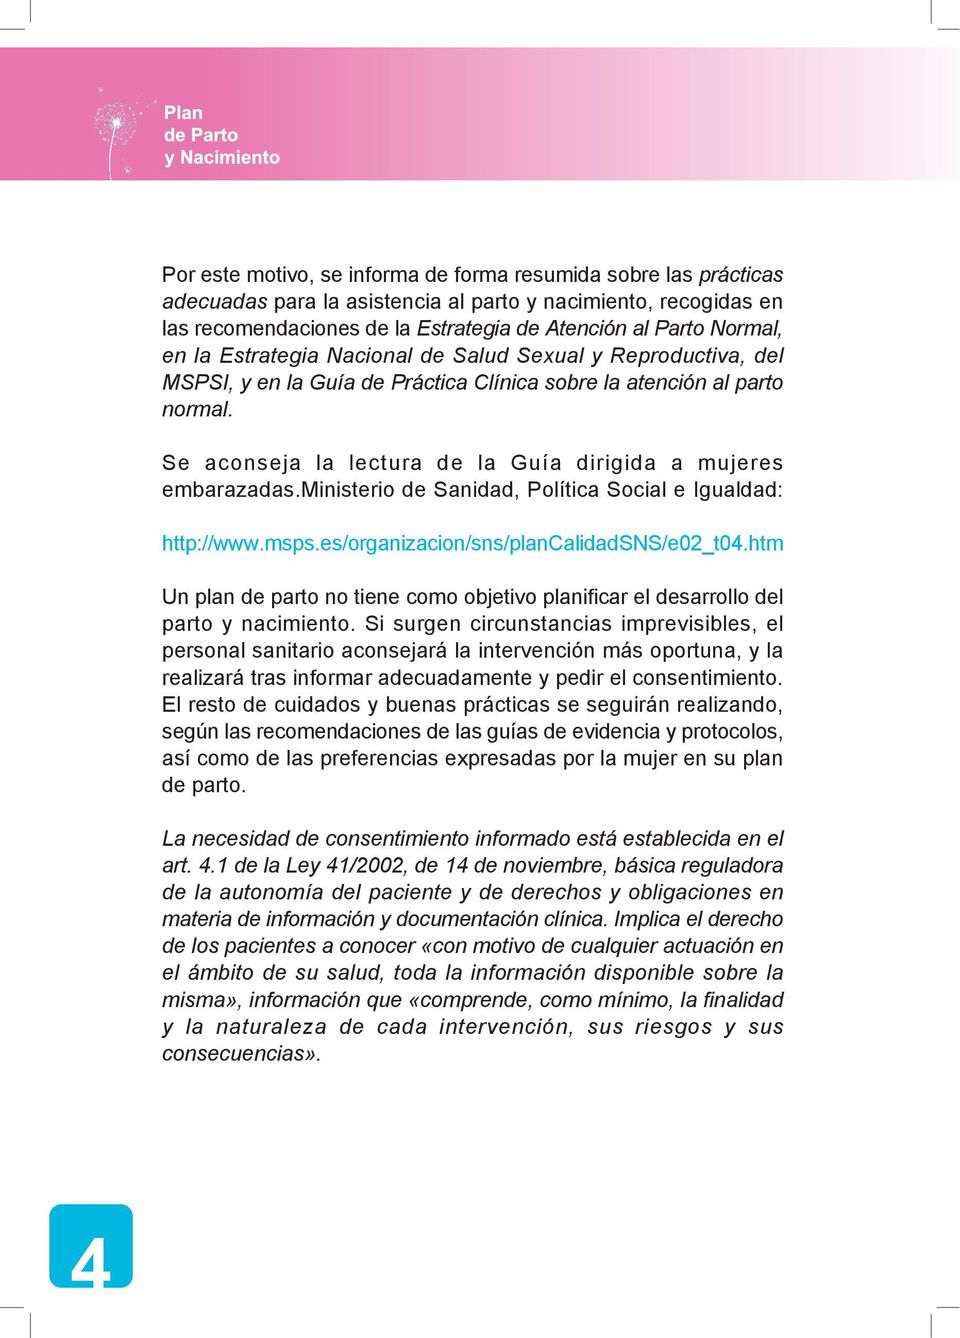 ministerio de Sanidad, Política Social e Igualdad: http://www.msps.es/organizacion/sns/plancalidadsns/e02_t04.